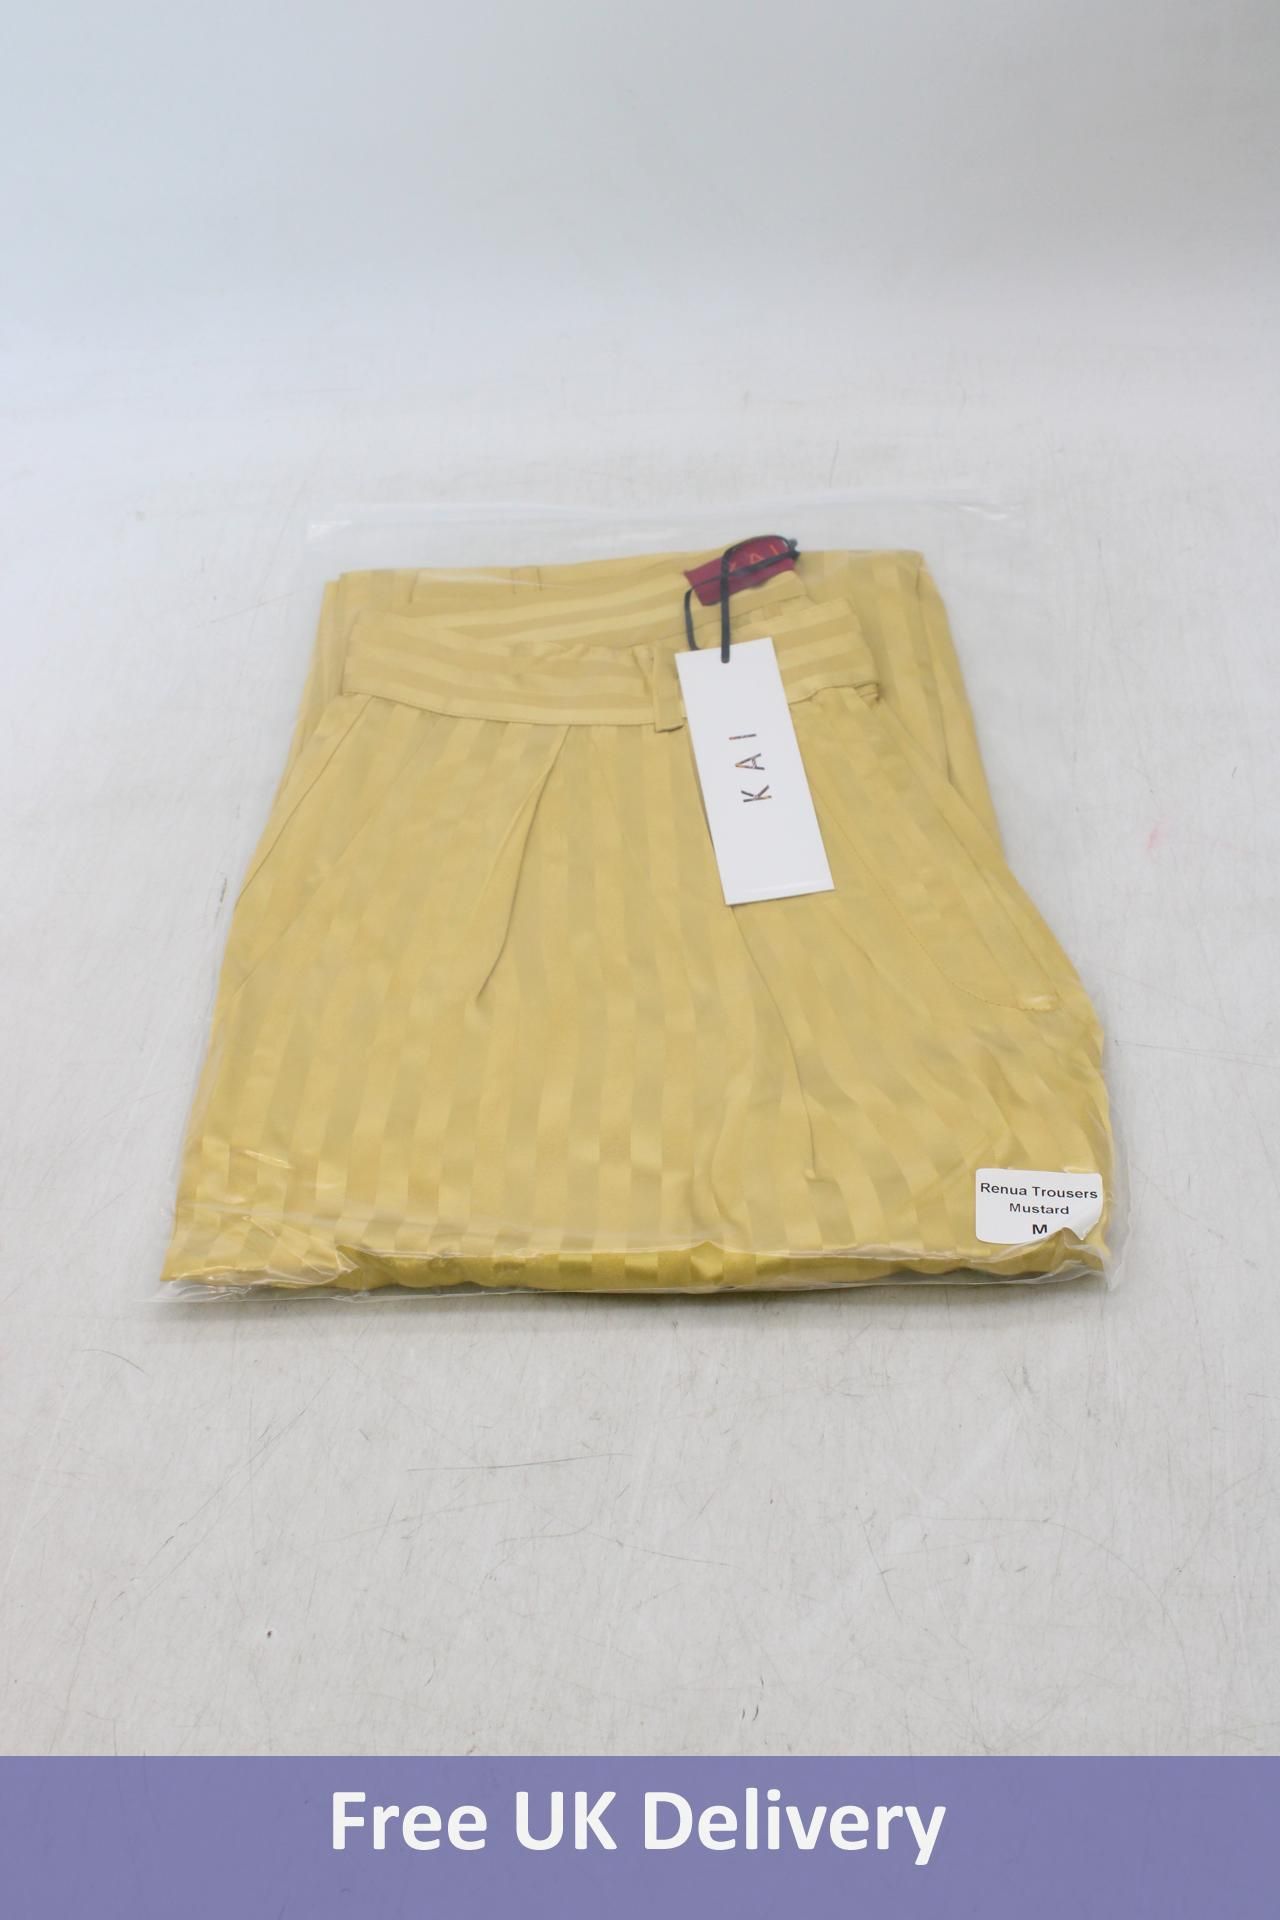 Kia Renua Striped Silky Trousers, Mustard, Small